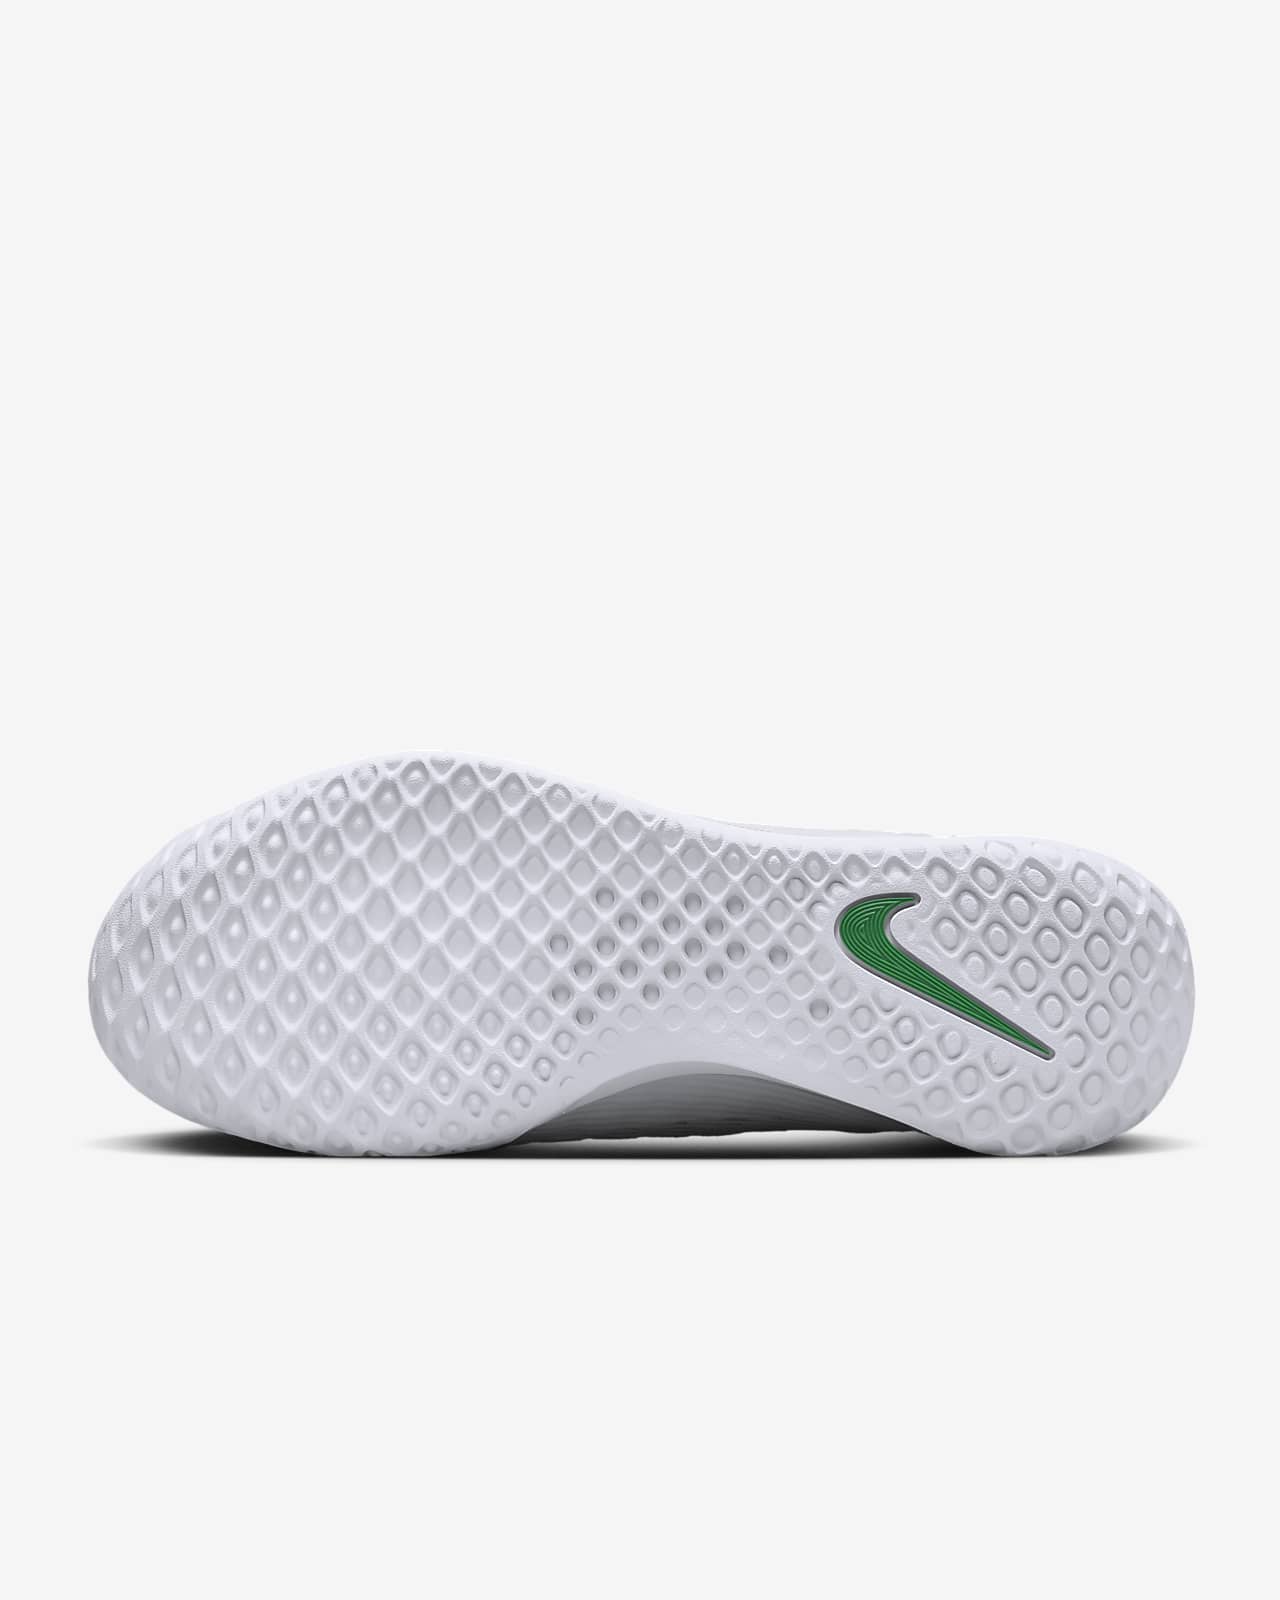 Nikecourt Air Zoom Nxt Men'S Hard Court Tennis Shoes. Nike Vn